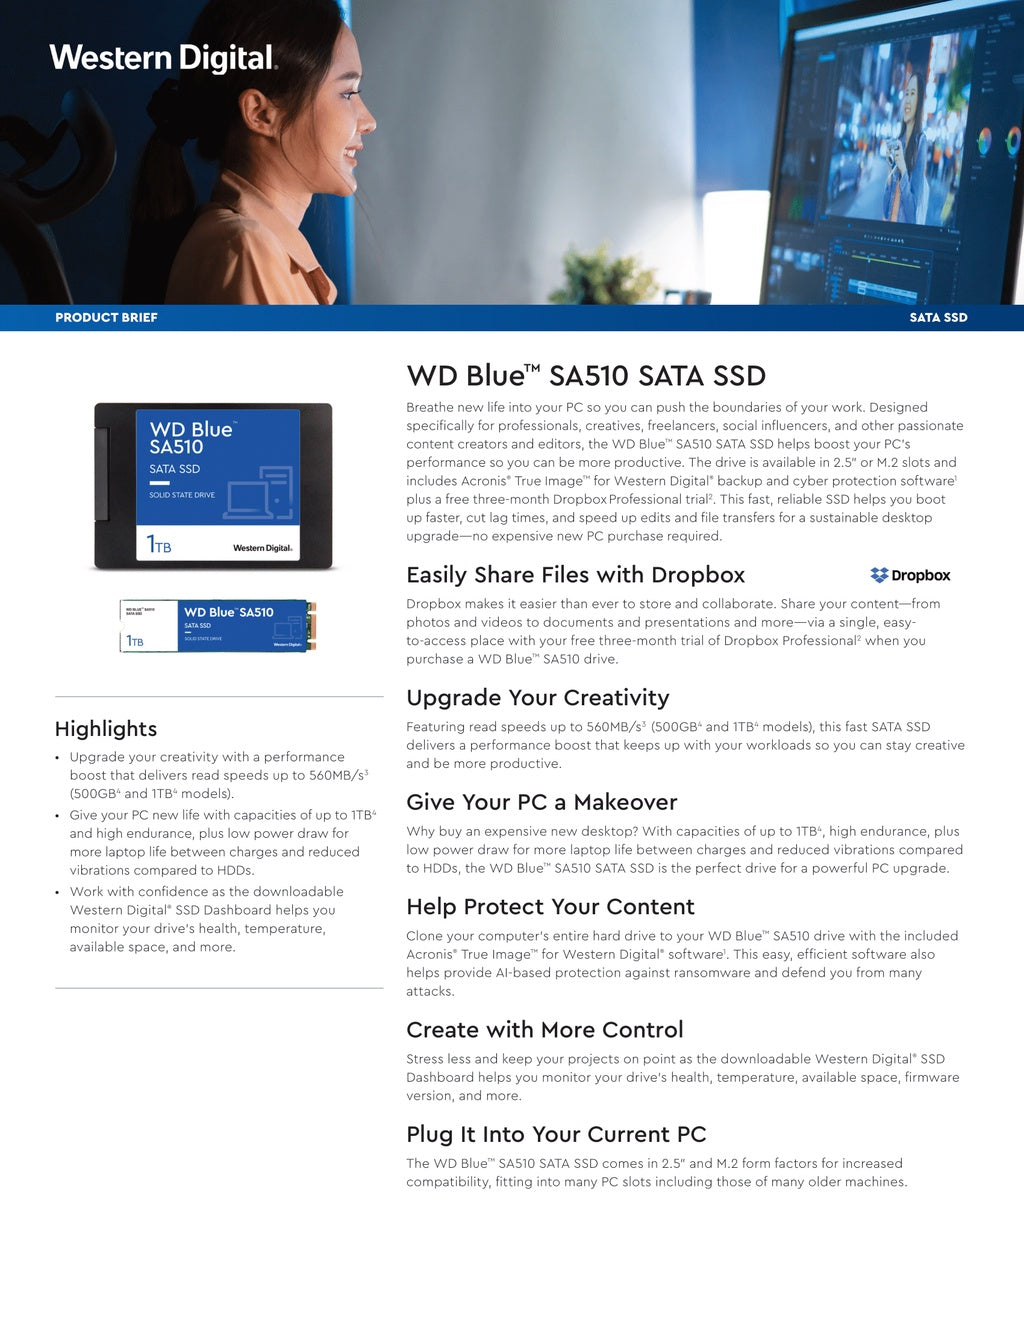 Western Digital WD Blue SA510 SSD Internal PC Desktop Solid State Drive